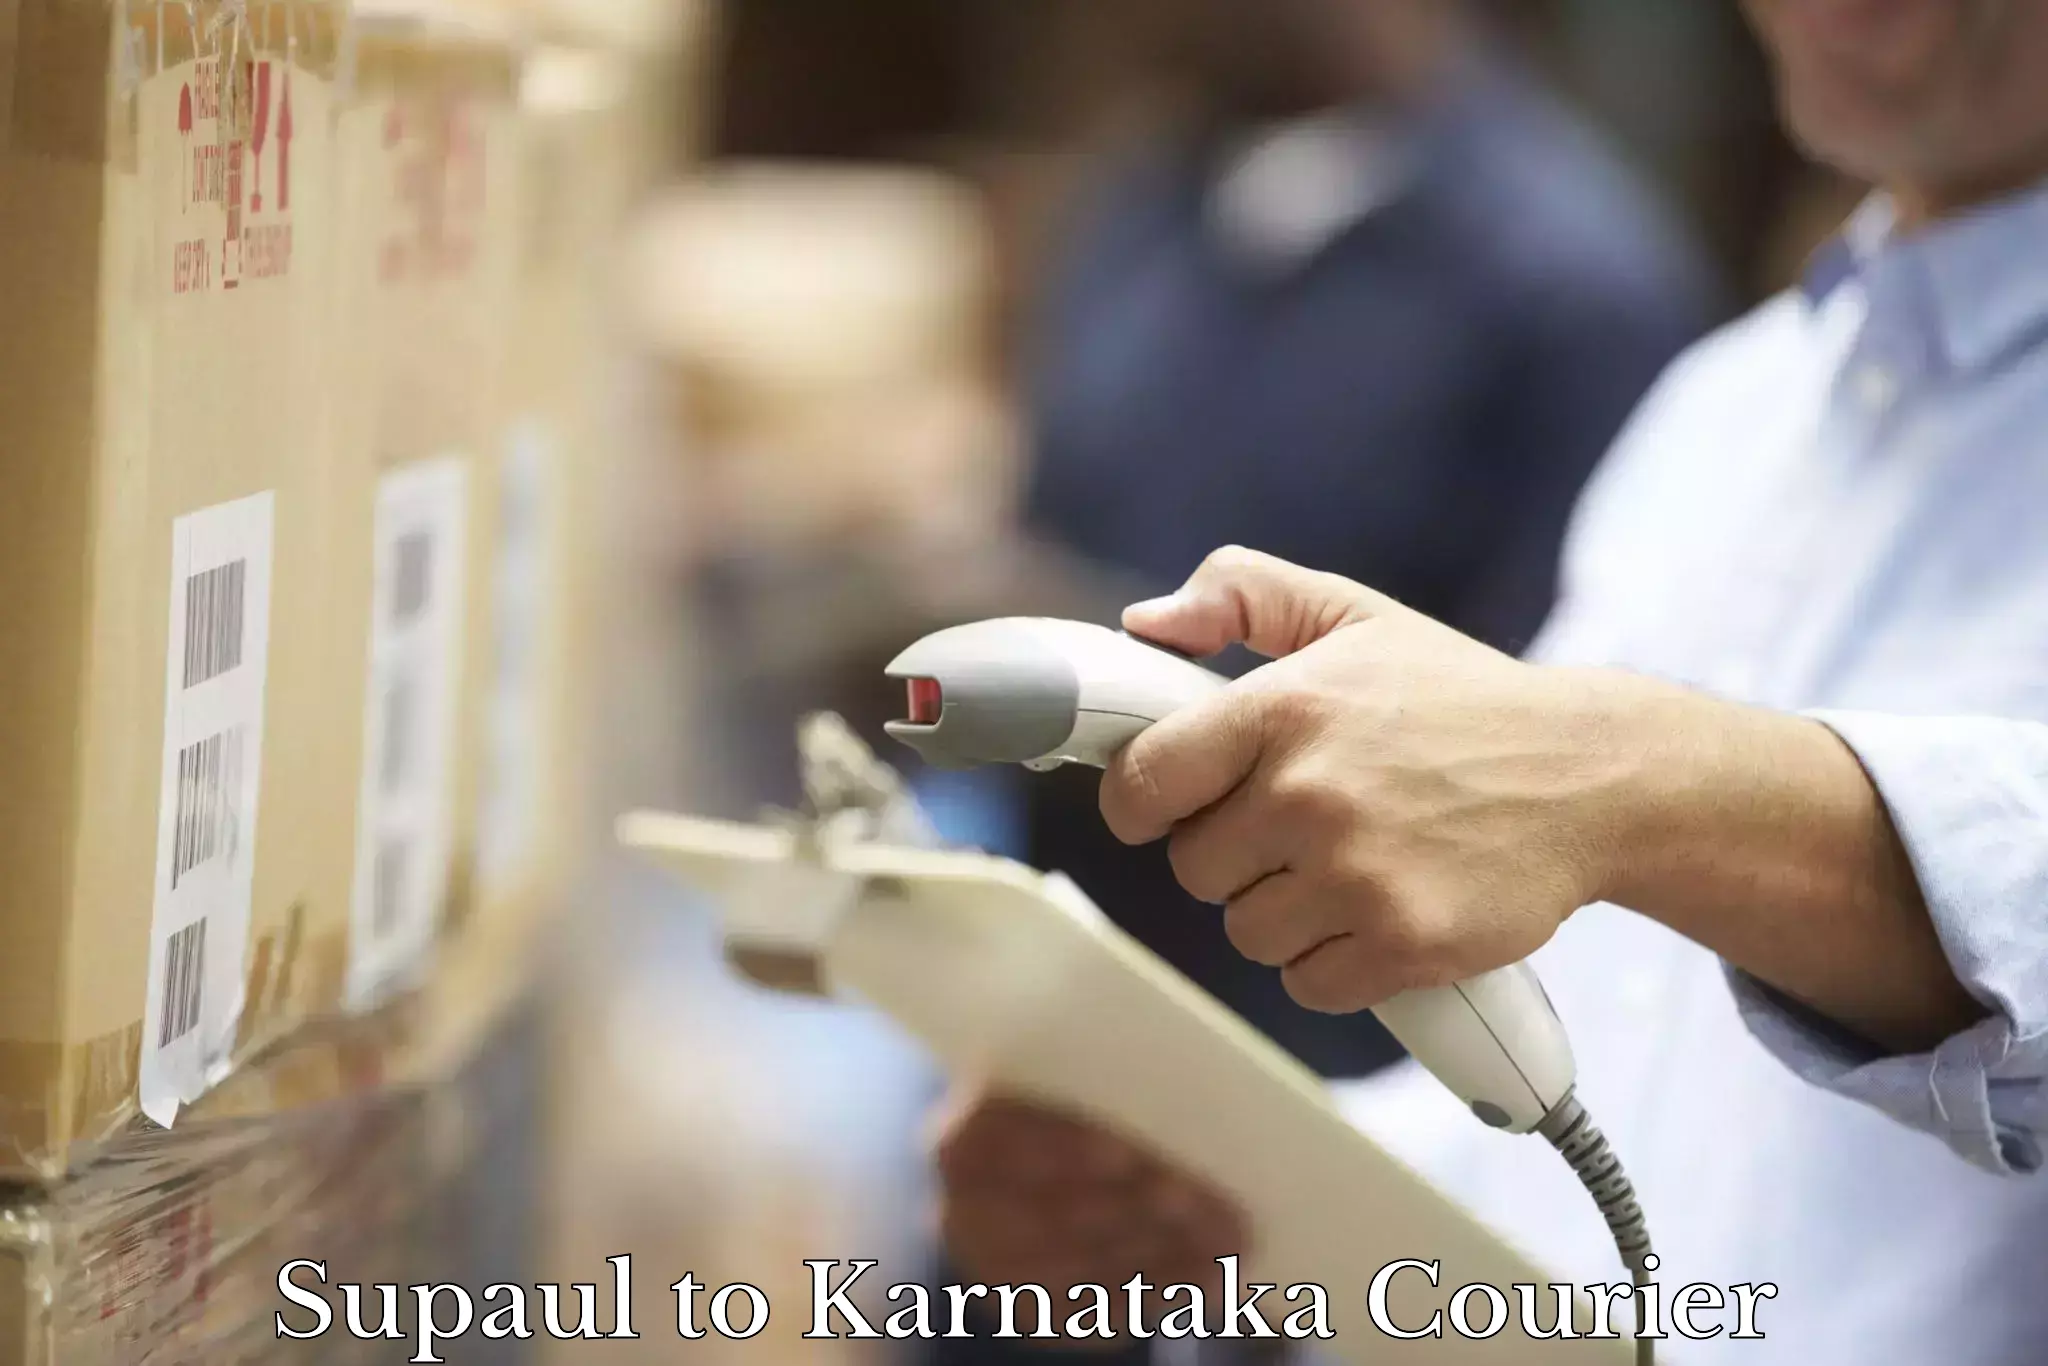 Next-day delivery options Supaul to Karnataka